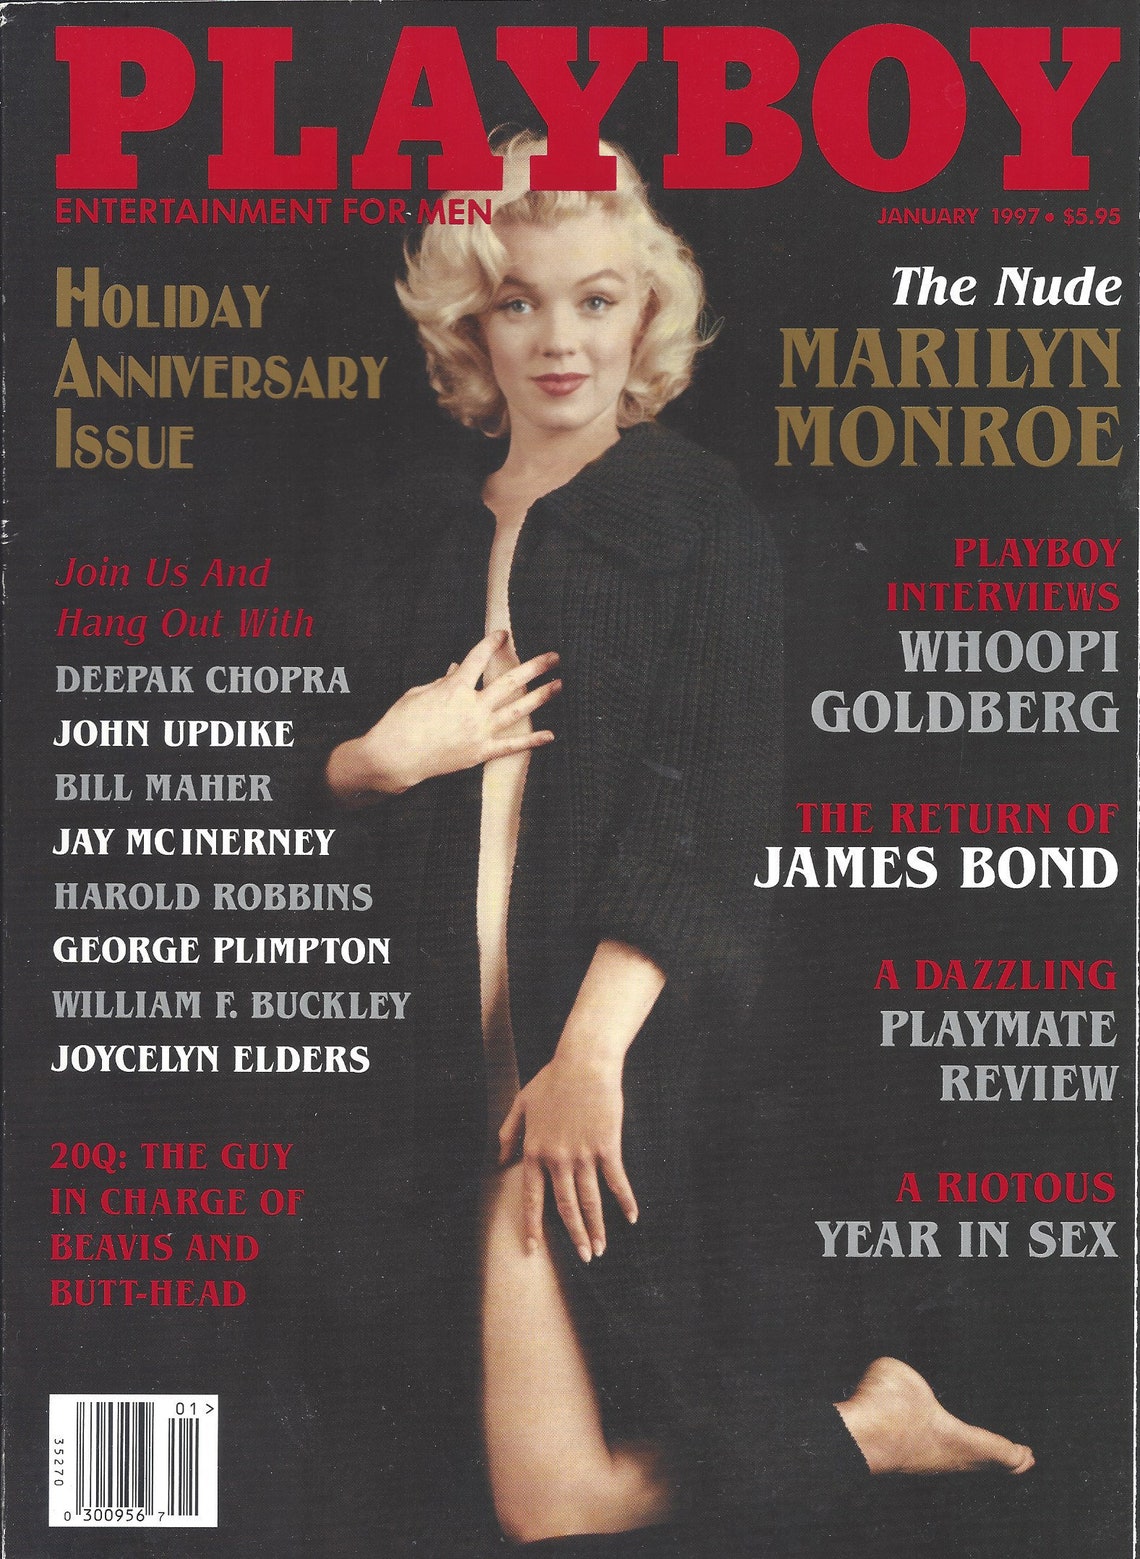 marilyn monroe James Bond playboy magazine nude December 